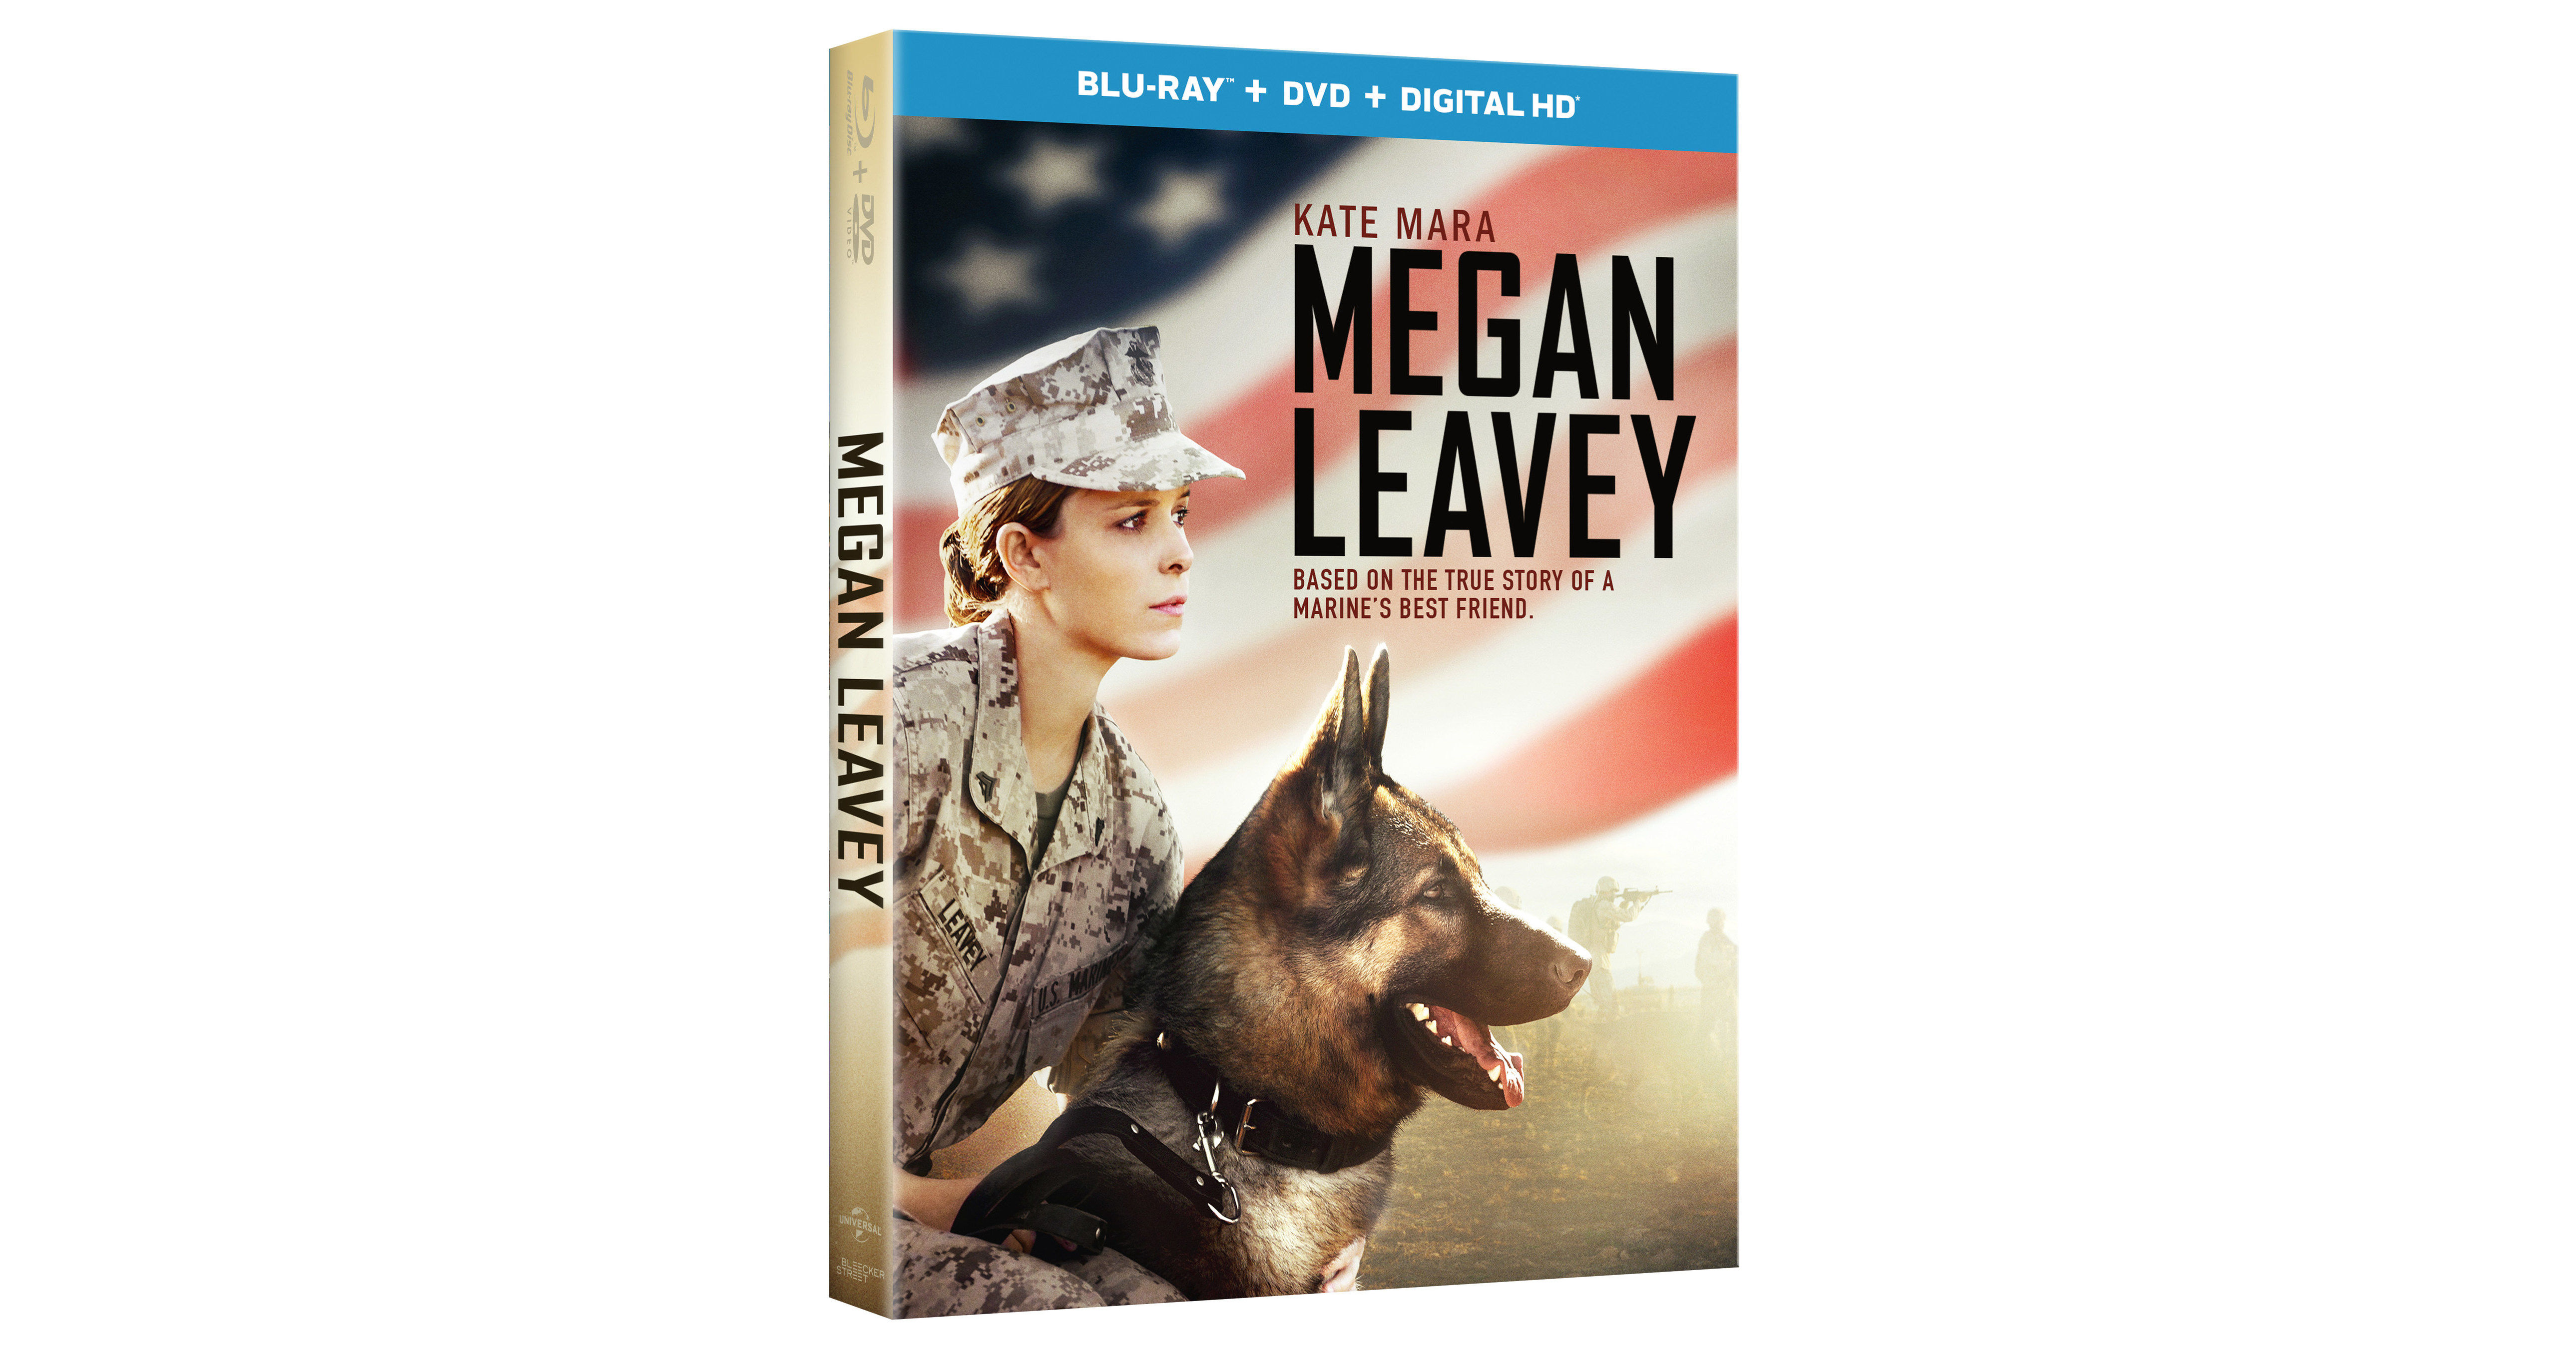 Real Life Megan Leavey Shares Stories of Dog Rex and Megan Leavey